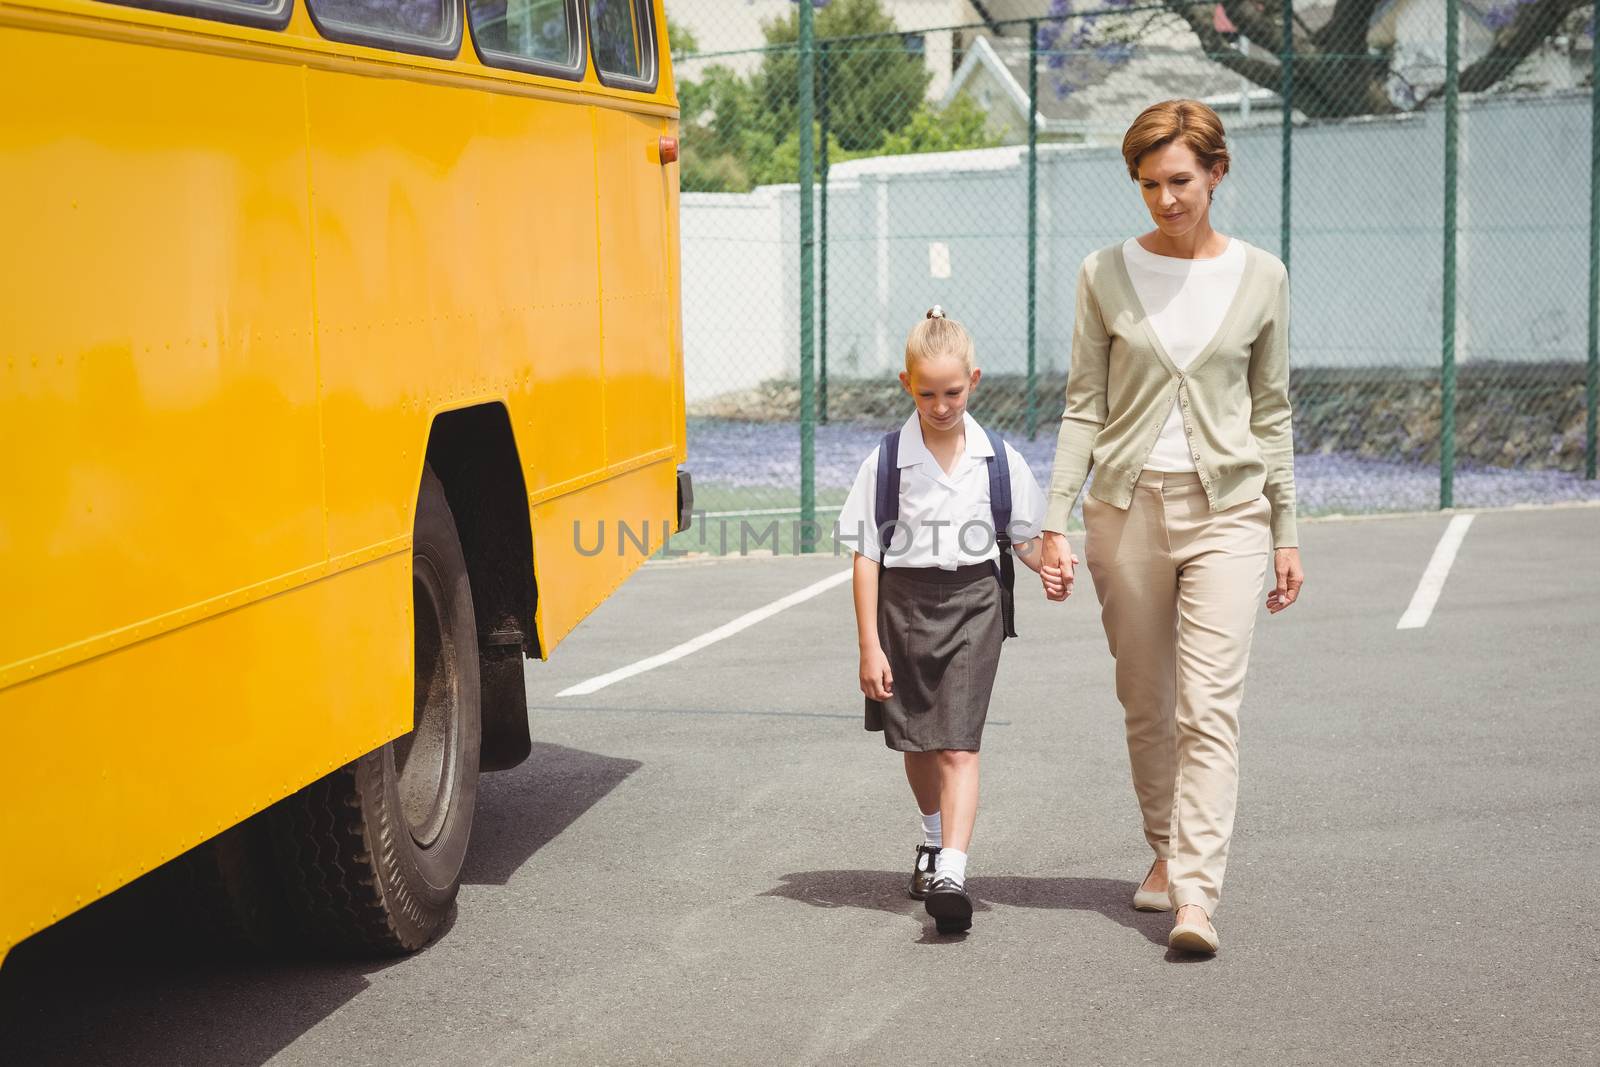 Mother walking her daughter to school bus by Wavebreakmedia